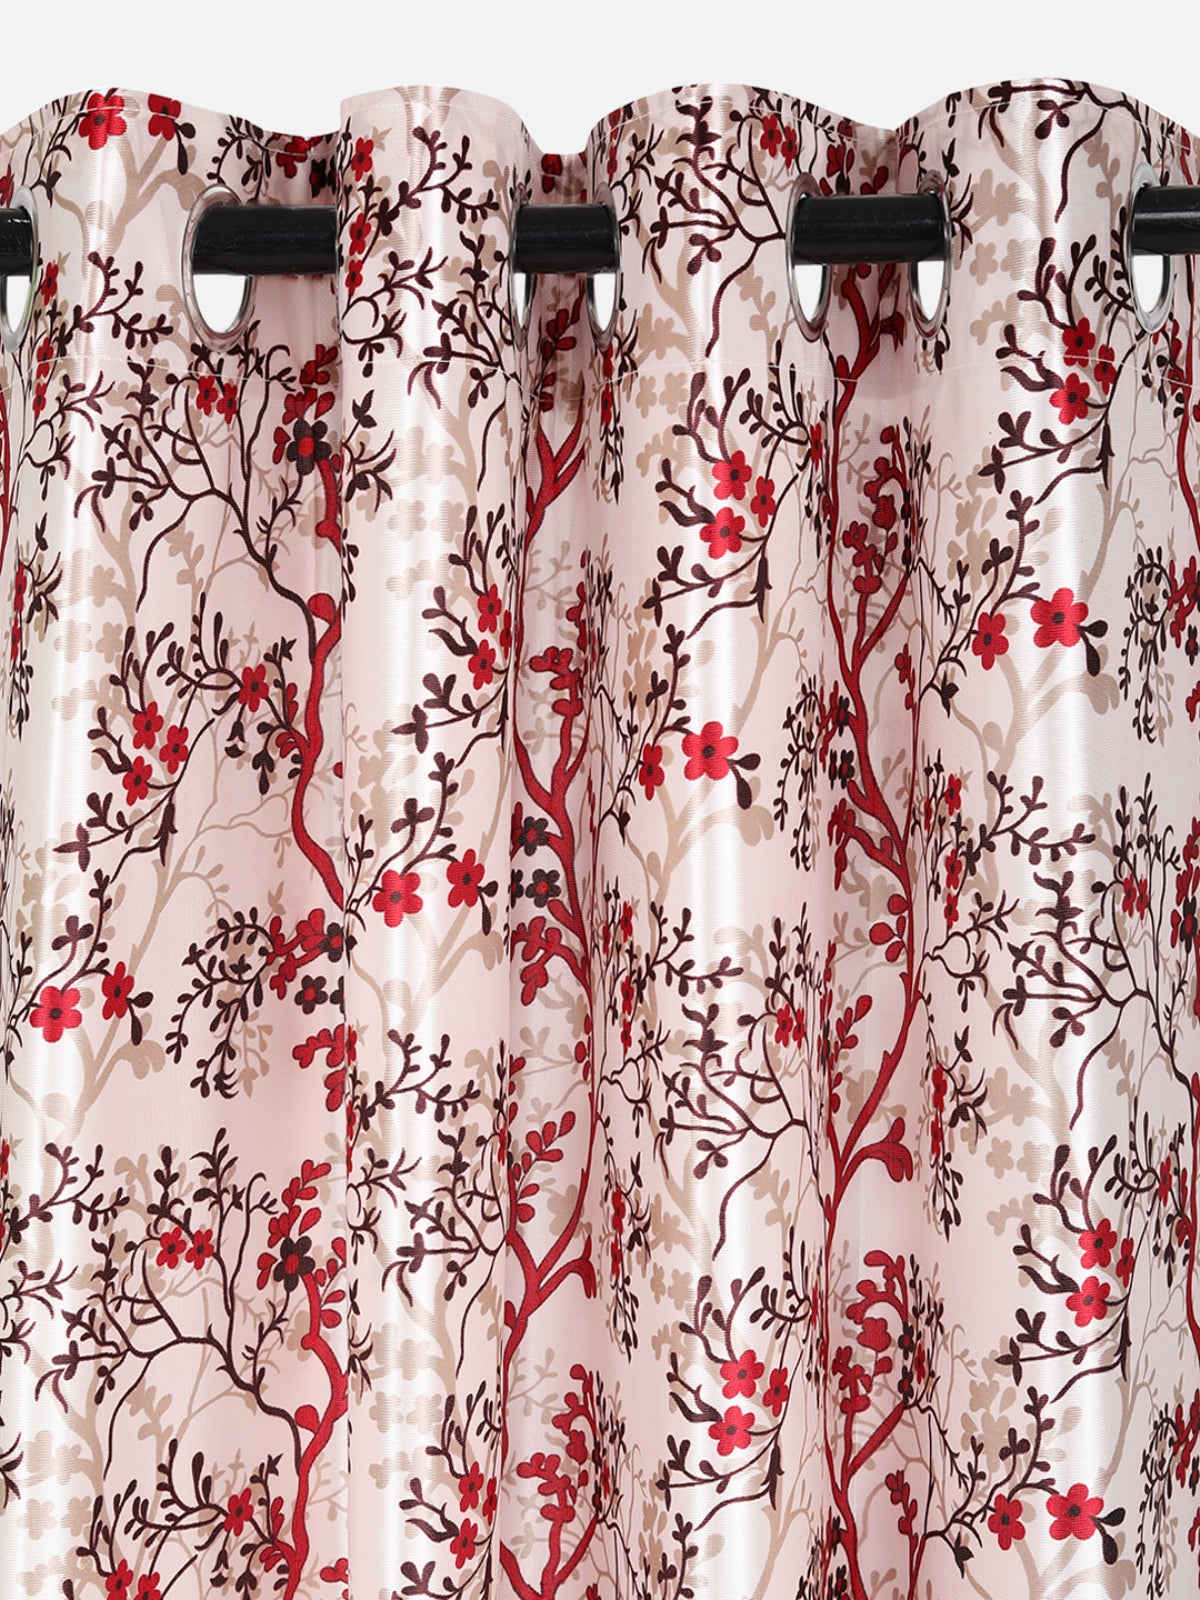 Romee Maroon & Cream Floral Patterned Set of 2 Window Curtains